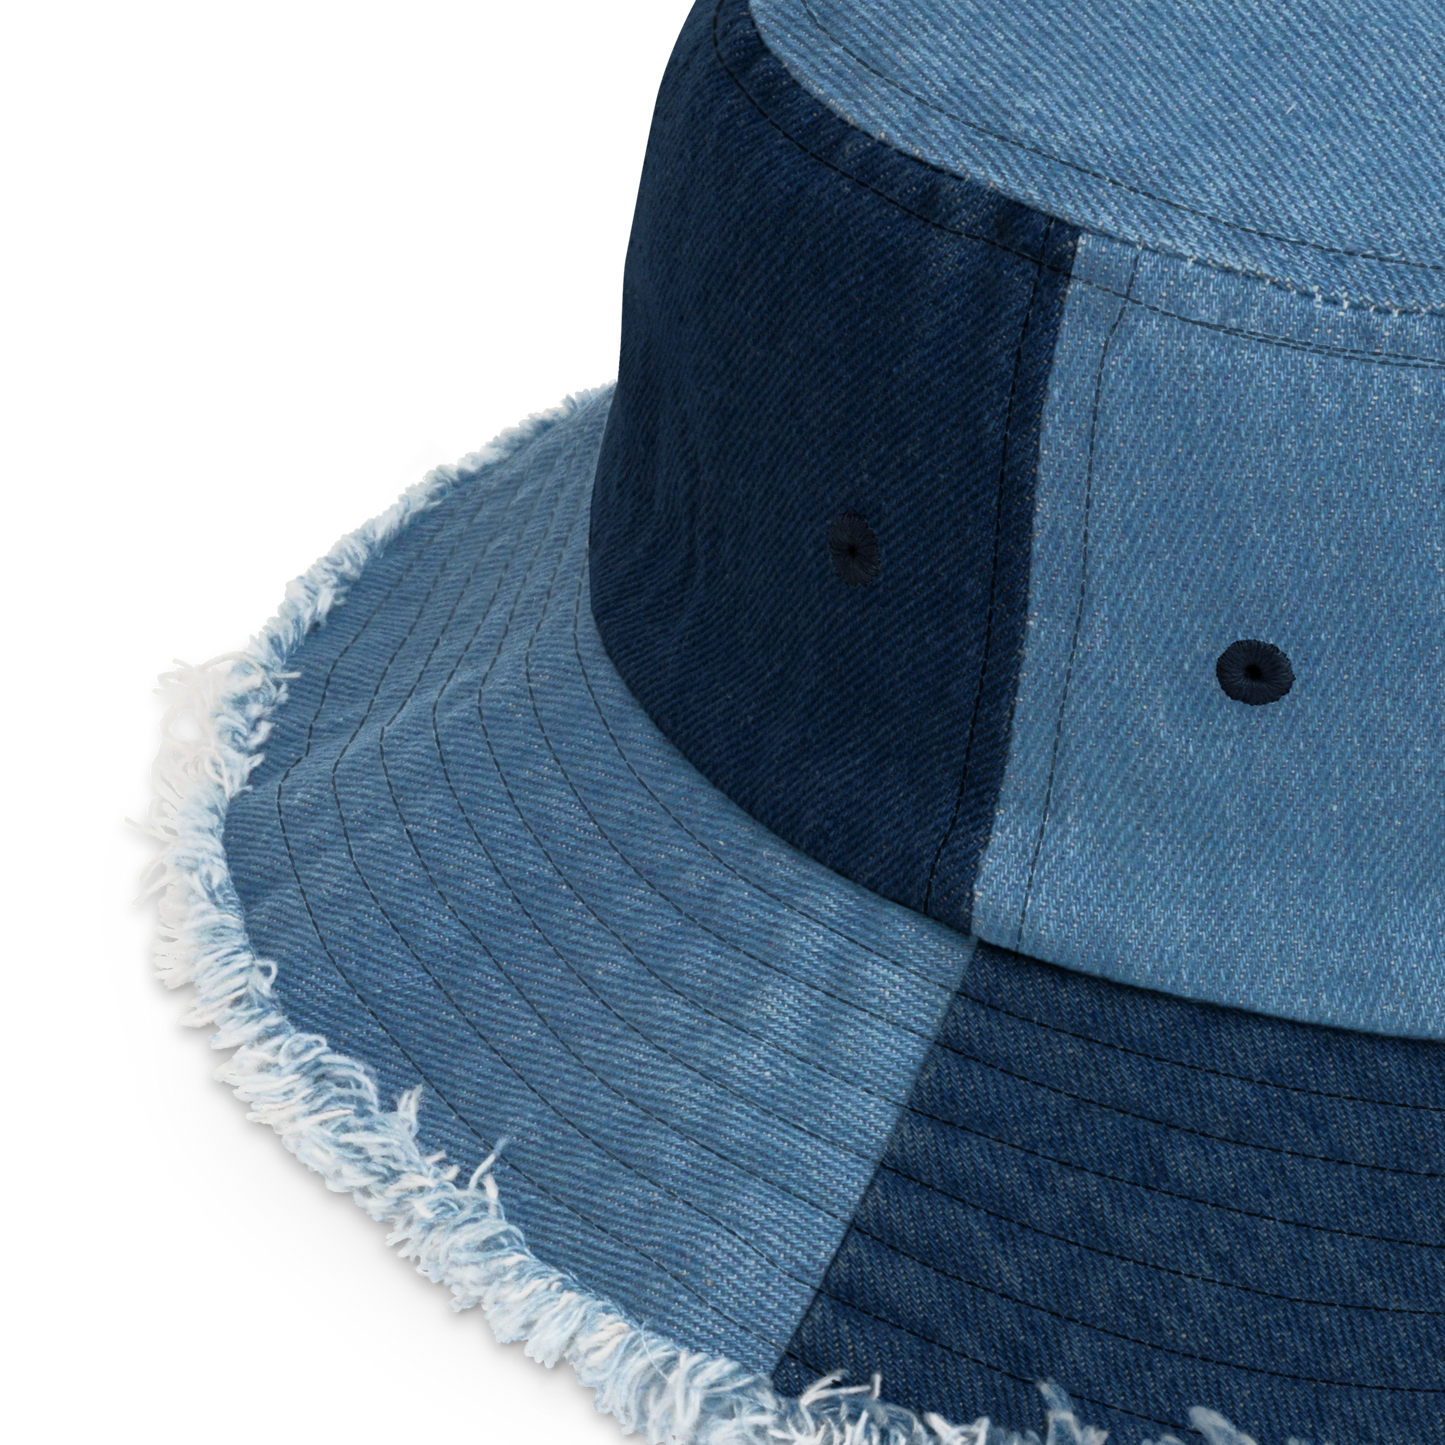 "Stinc Team" Blue Bucket Hat